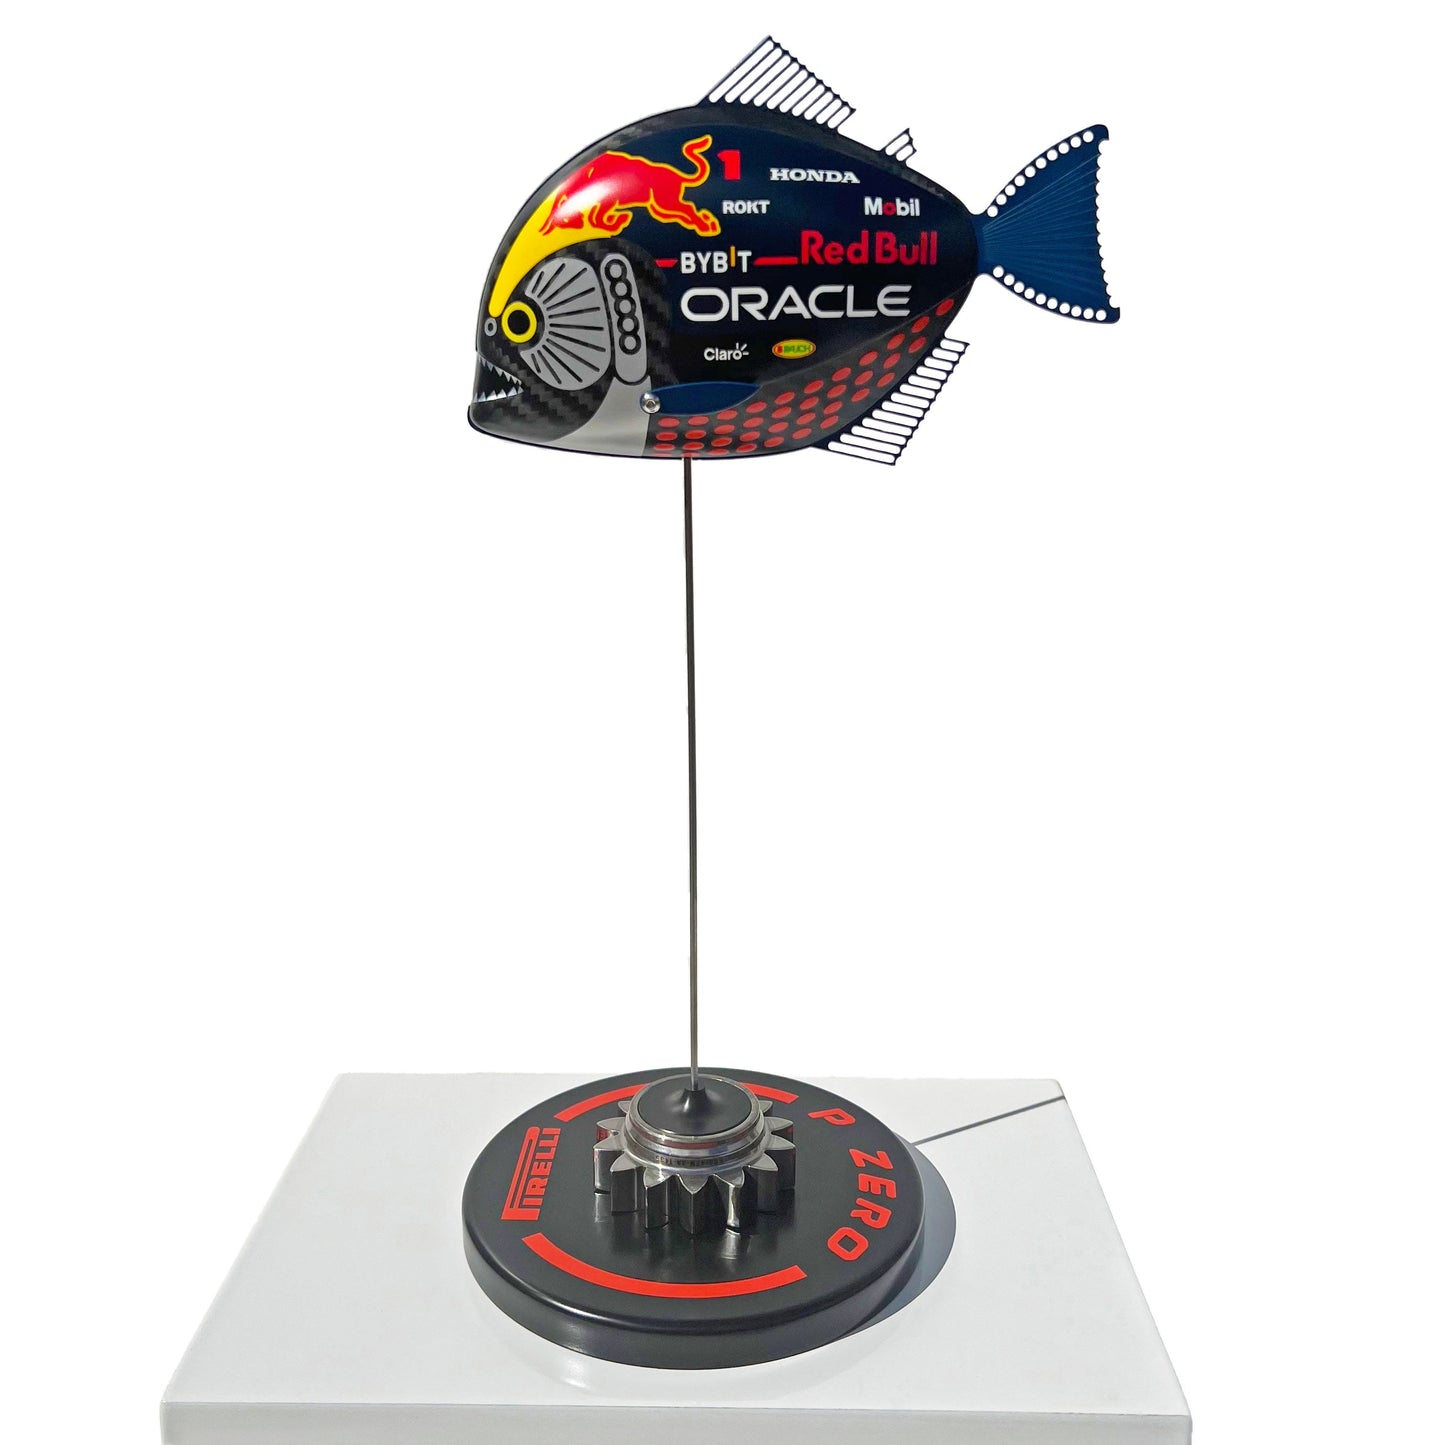 Carbon Fibre Piranha sculpture with 2023 RedBull Racing Formula One Livery.